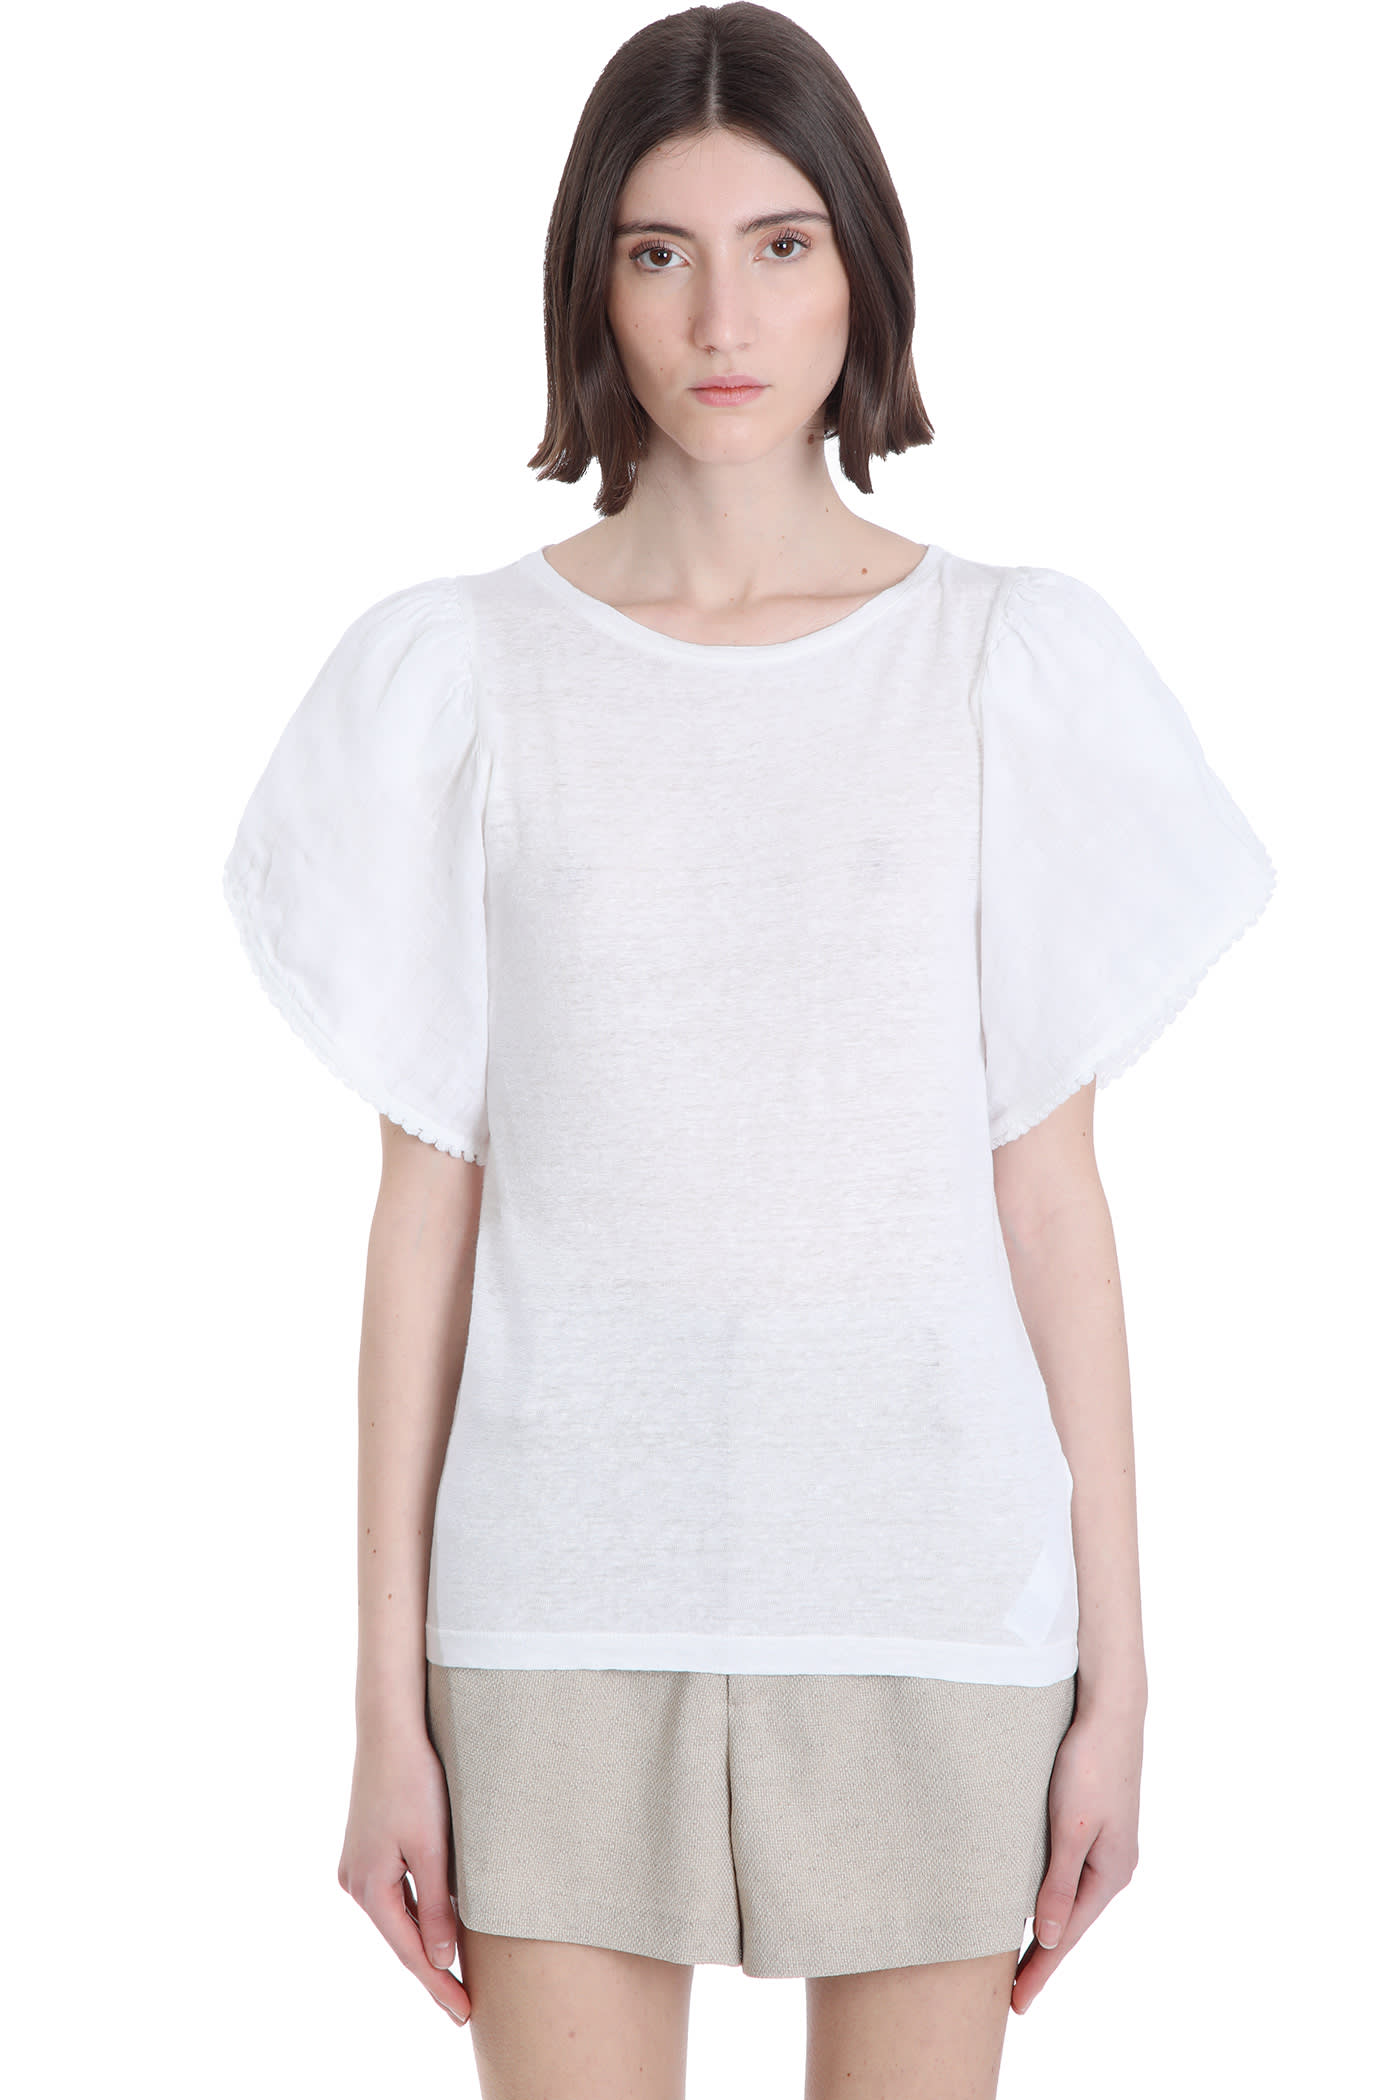 120 Lino - 120% lino blouse in white linen